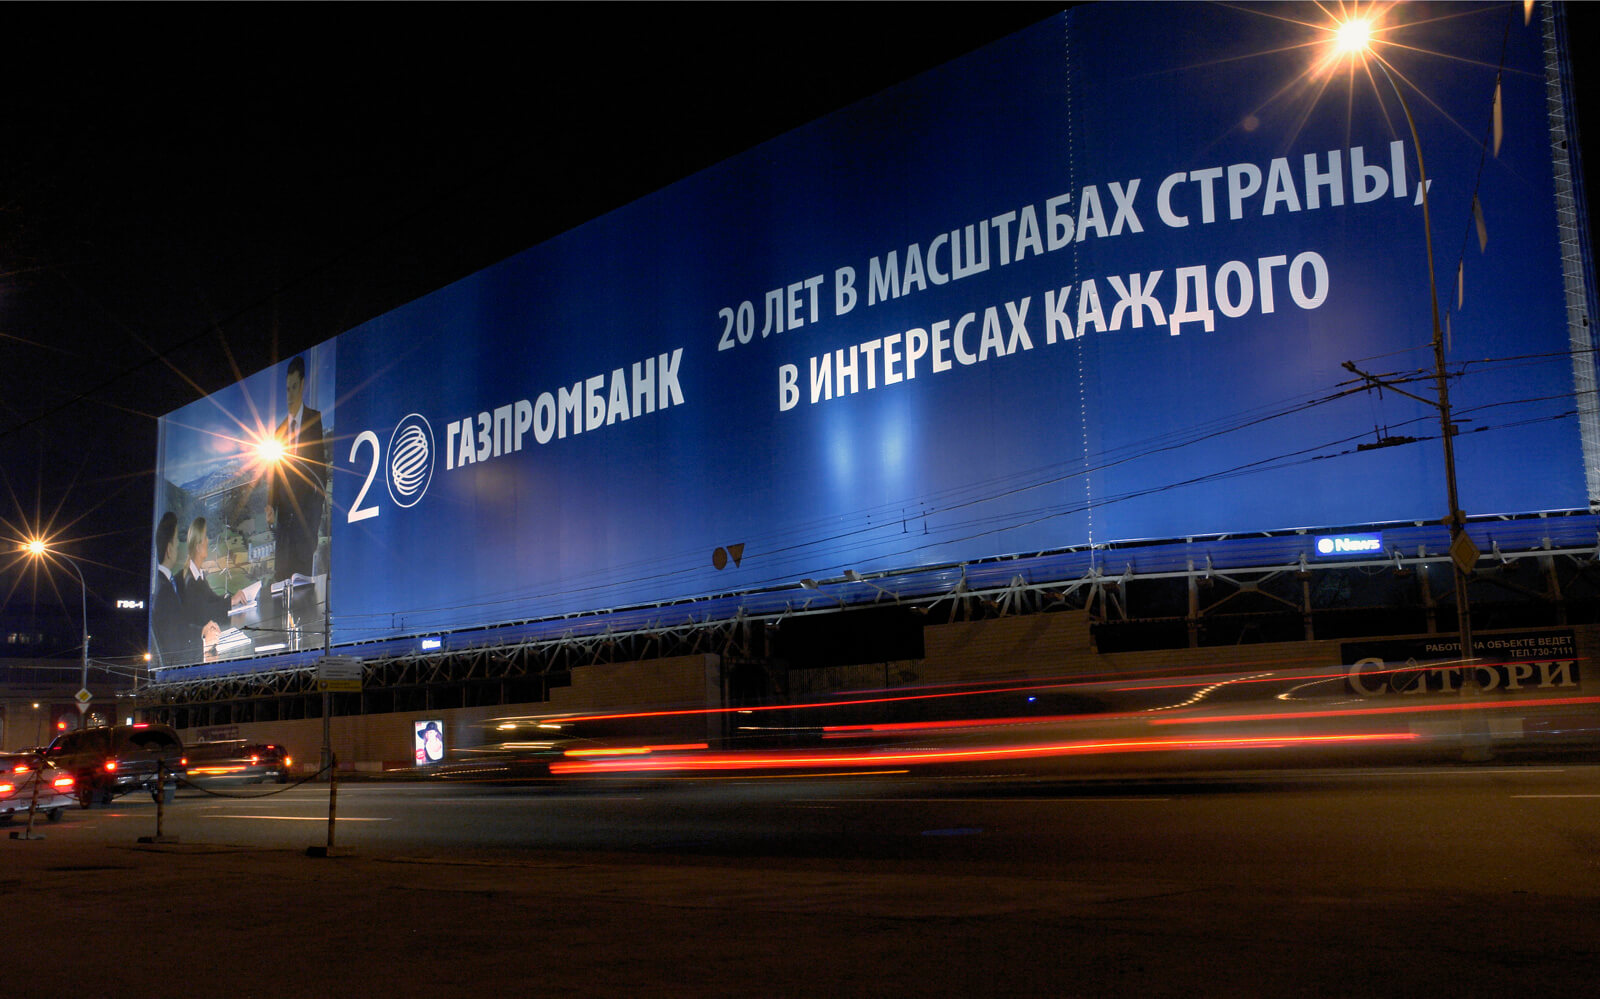 Газпромбанк баннер. Газпромбанк реклама. Газпромбанк билборд.